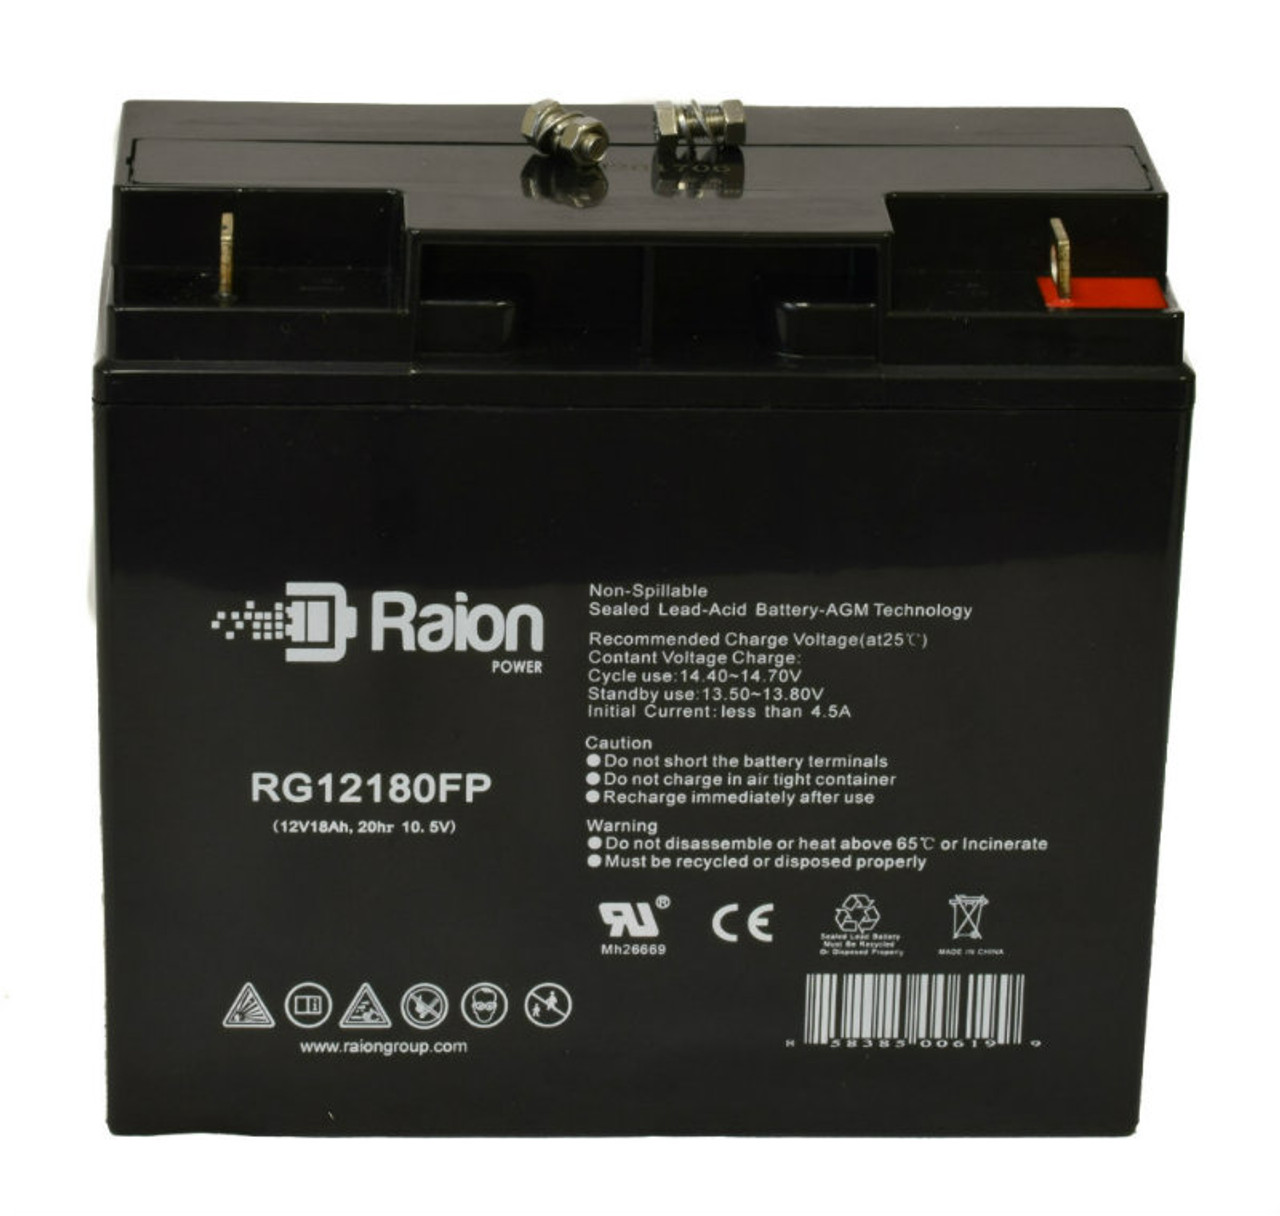 Raion Power RG12180FP 12V 18Ah AGM Battery for Stanley PPRH5 Professional Power Station